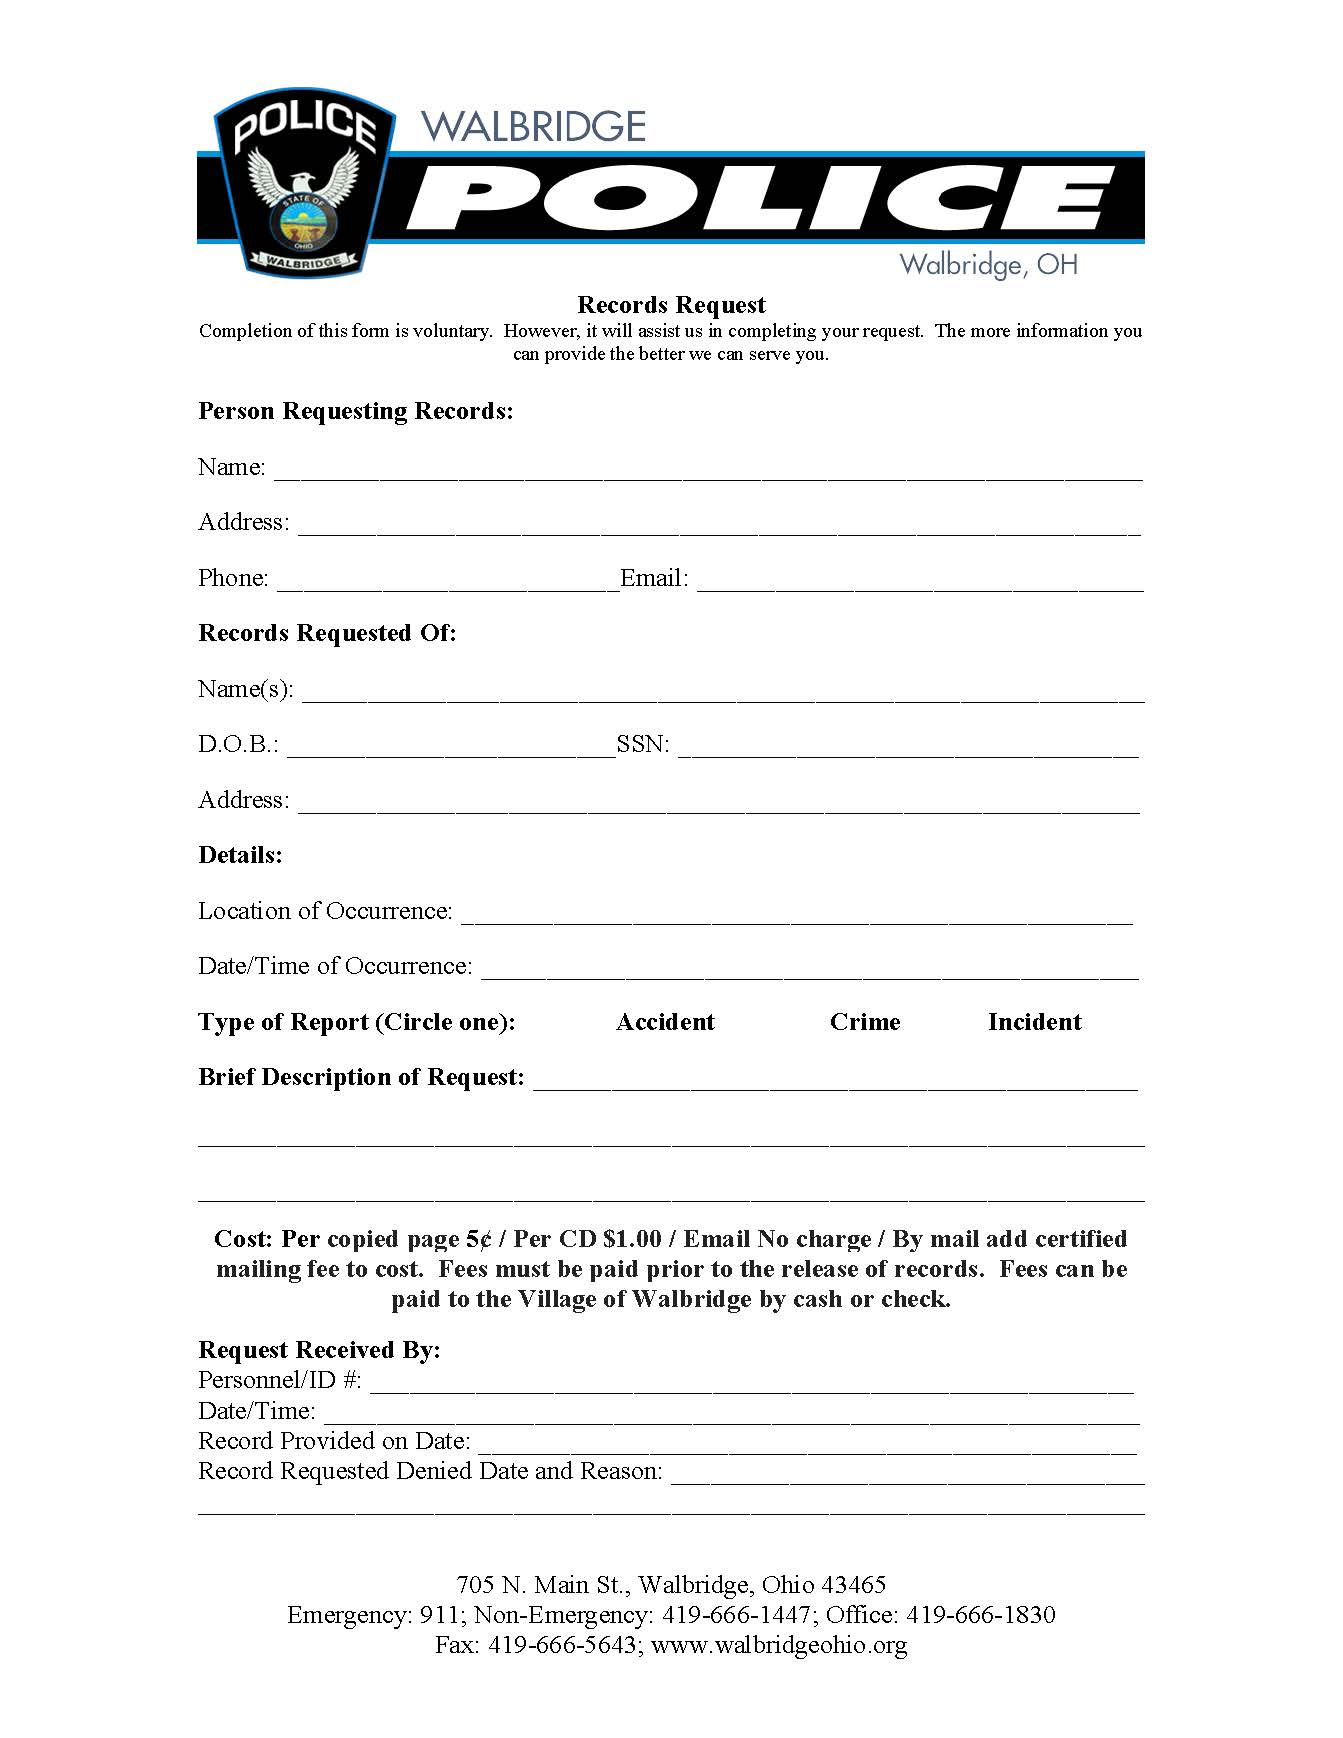 Village of Walbridge Ohio Police Records Request Form